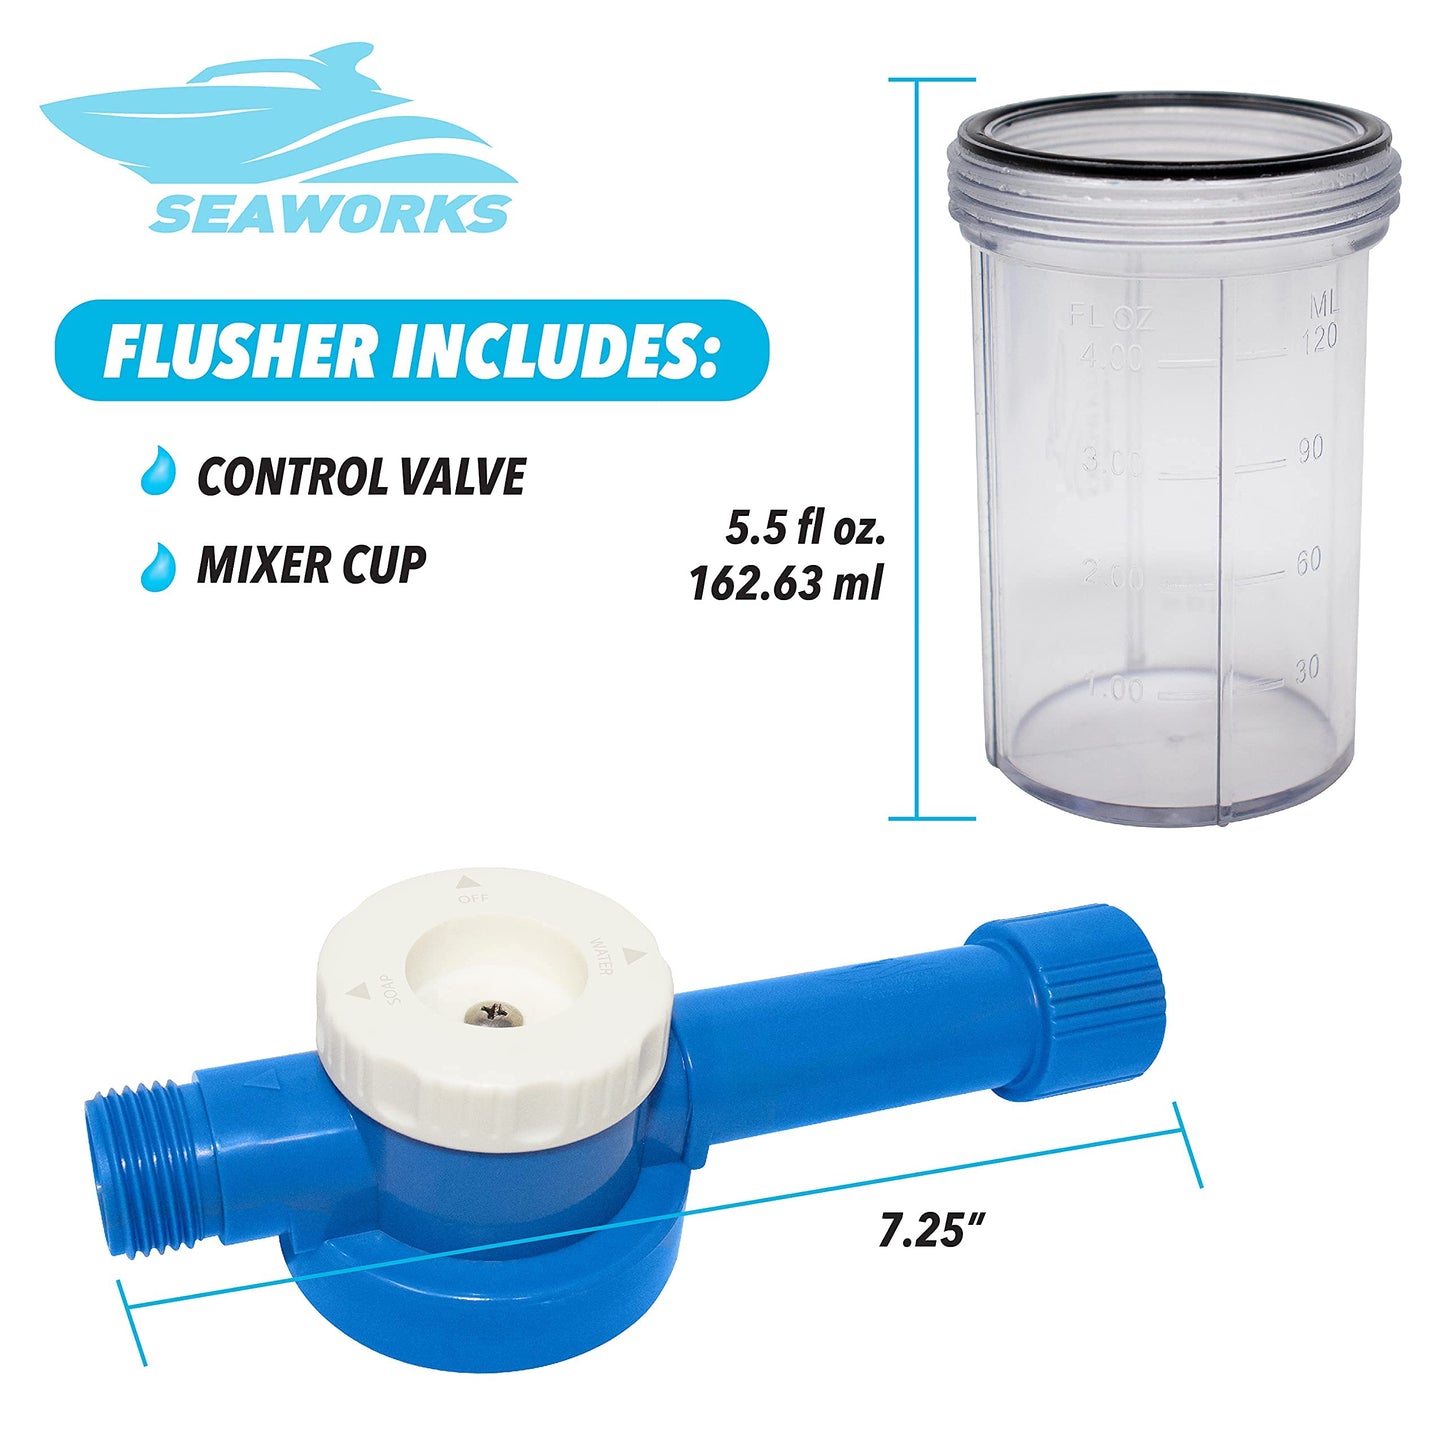 Flush Mixer with Gallon/128 Fl Oz Salt Remover